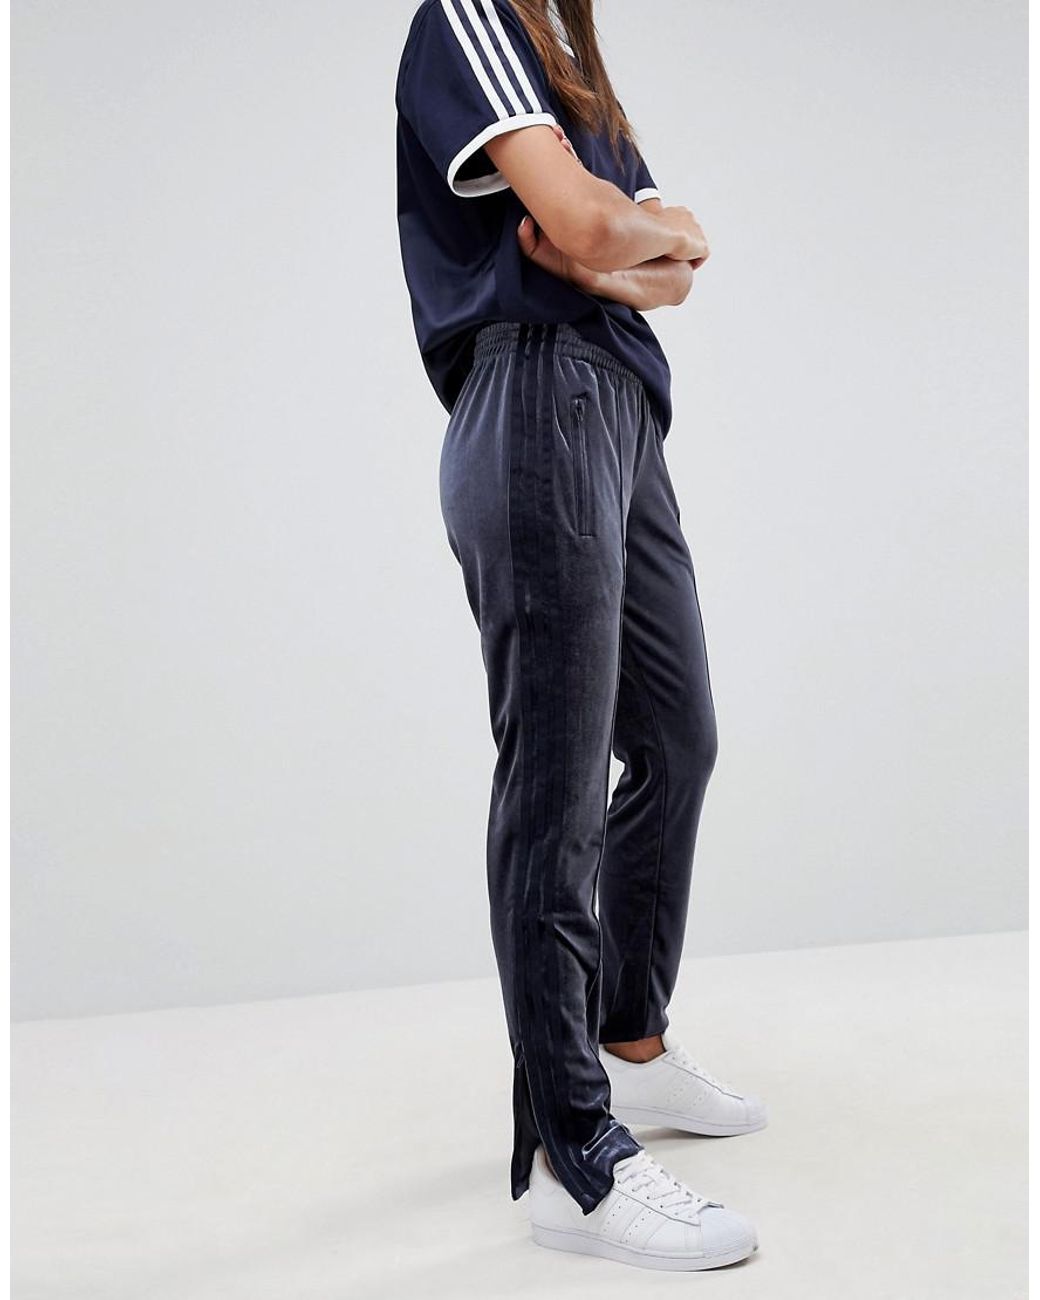 adidas Originals Originals Firebird Track Pant In Navy Velvet in Blue | Lyst